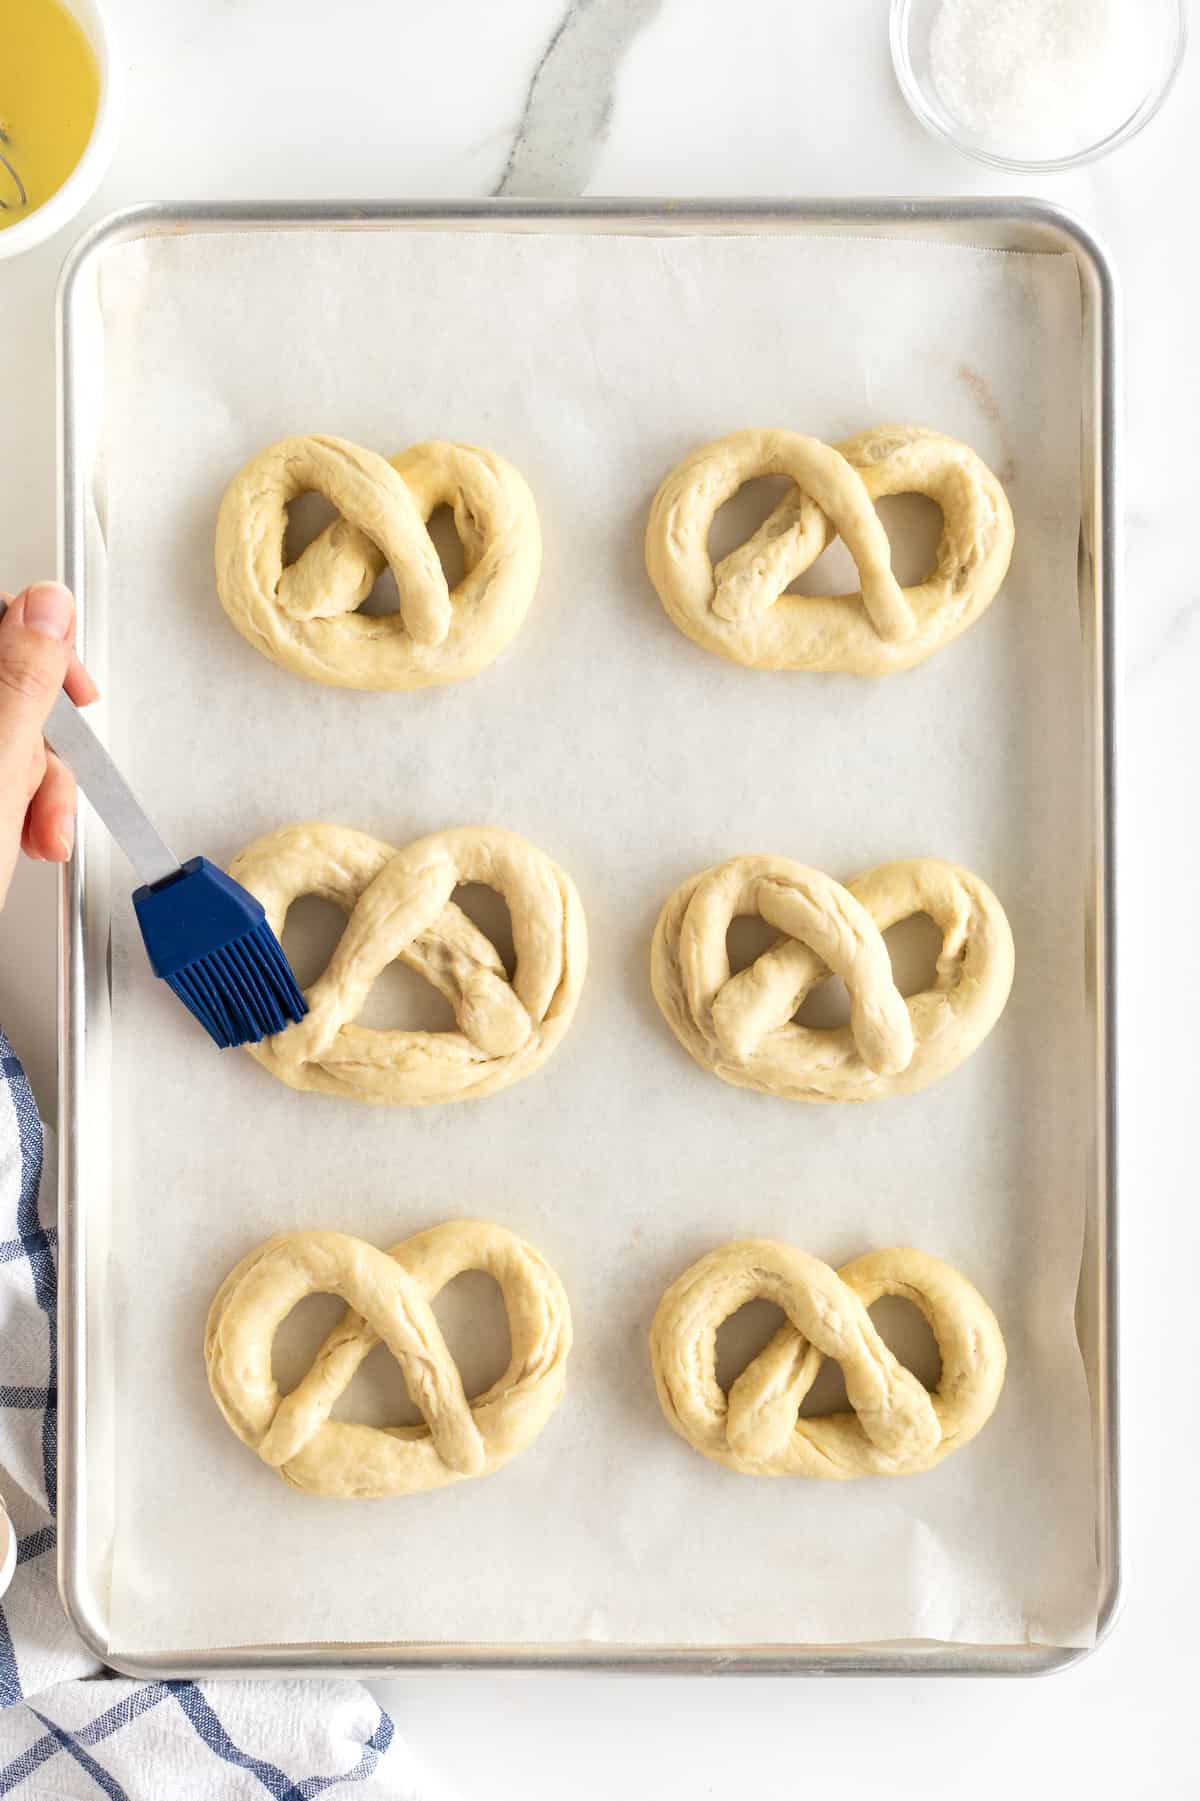 Six uncooked soft pretzels on a parchment lined baking sheet.